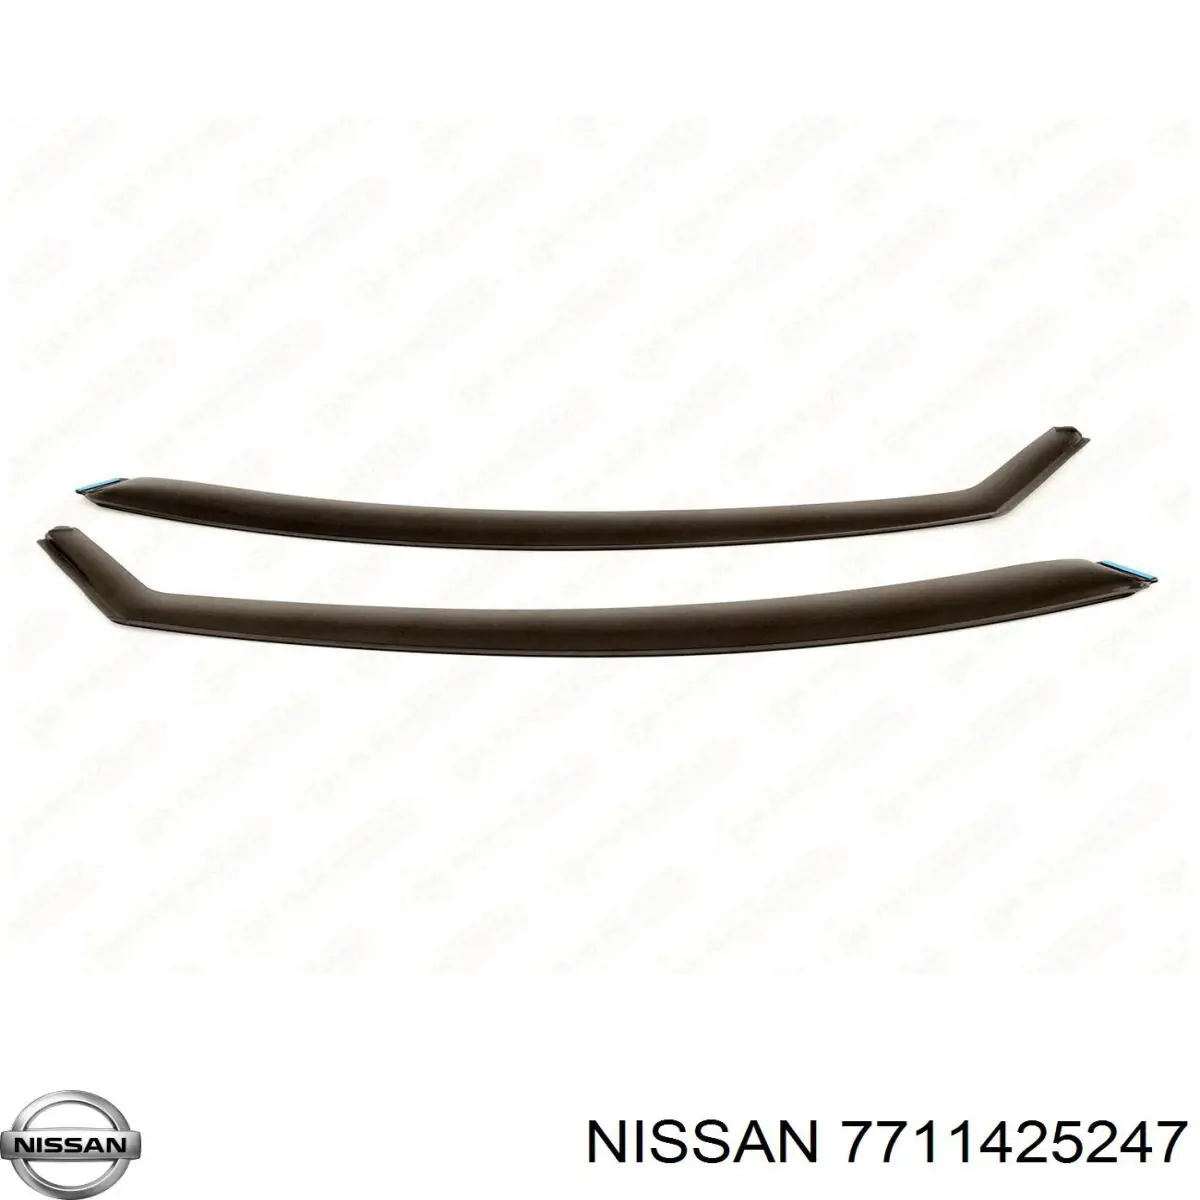 7711425247 Nissan дефлектор окон на стекло двери, комплект 2 шт